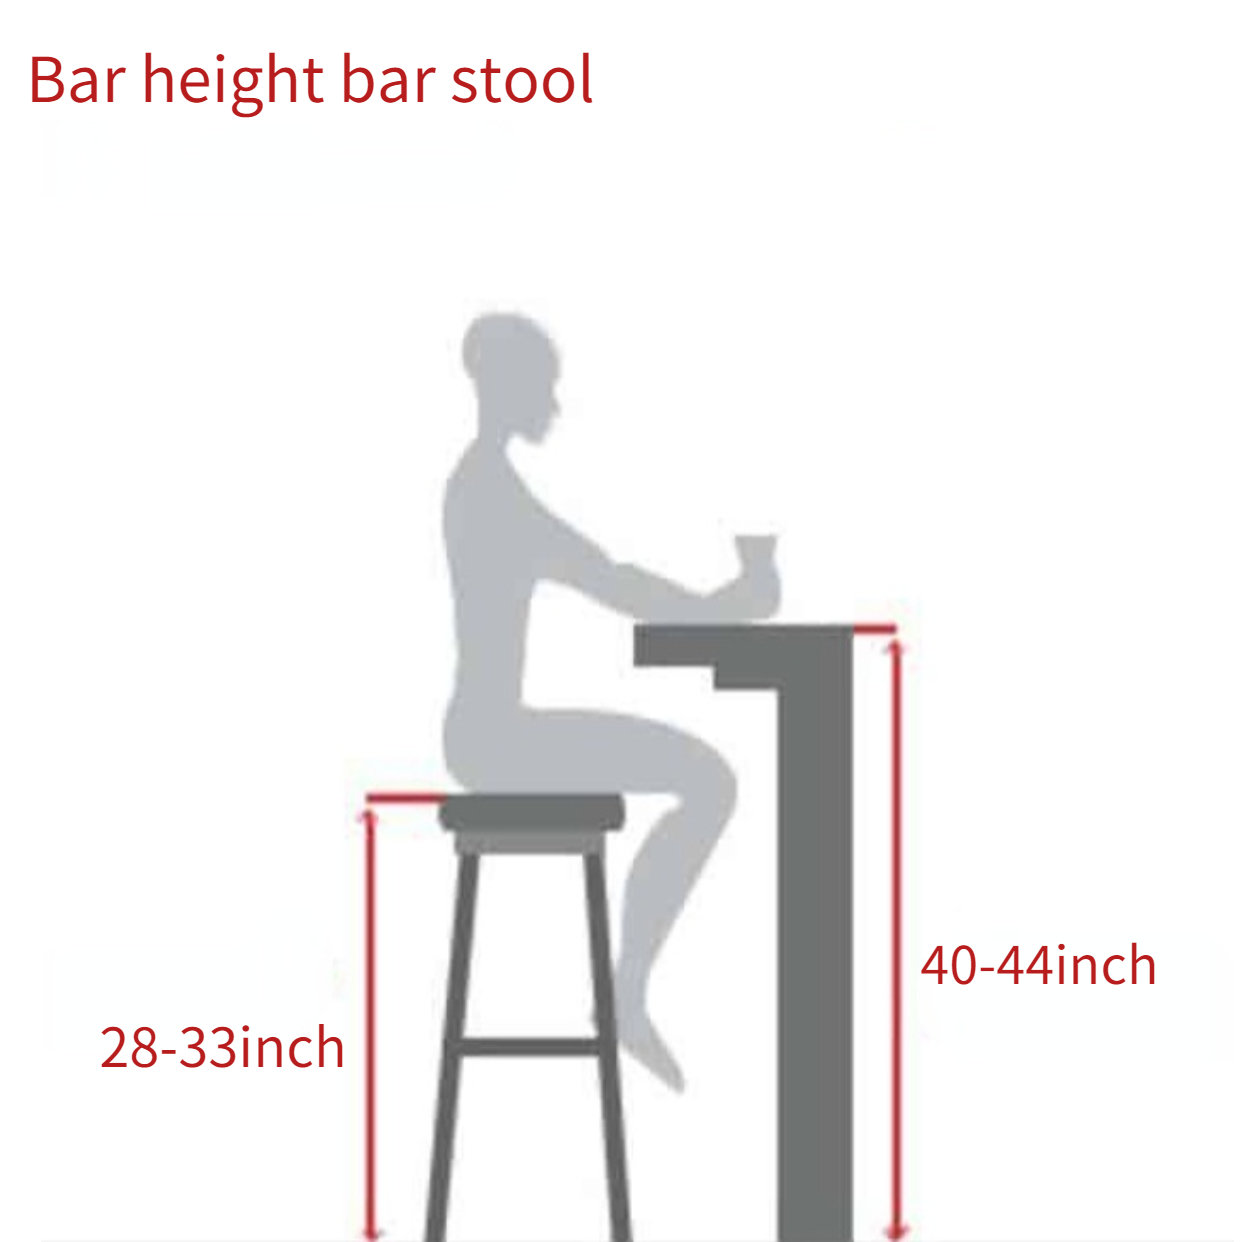 bar height bar stool